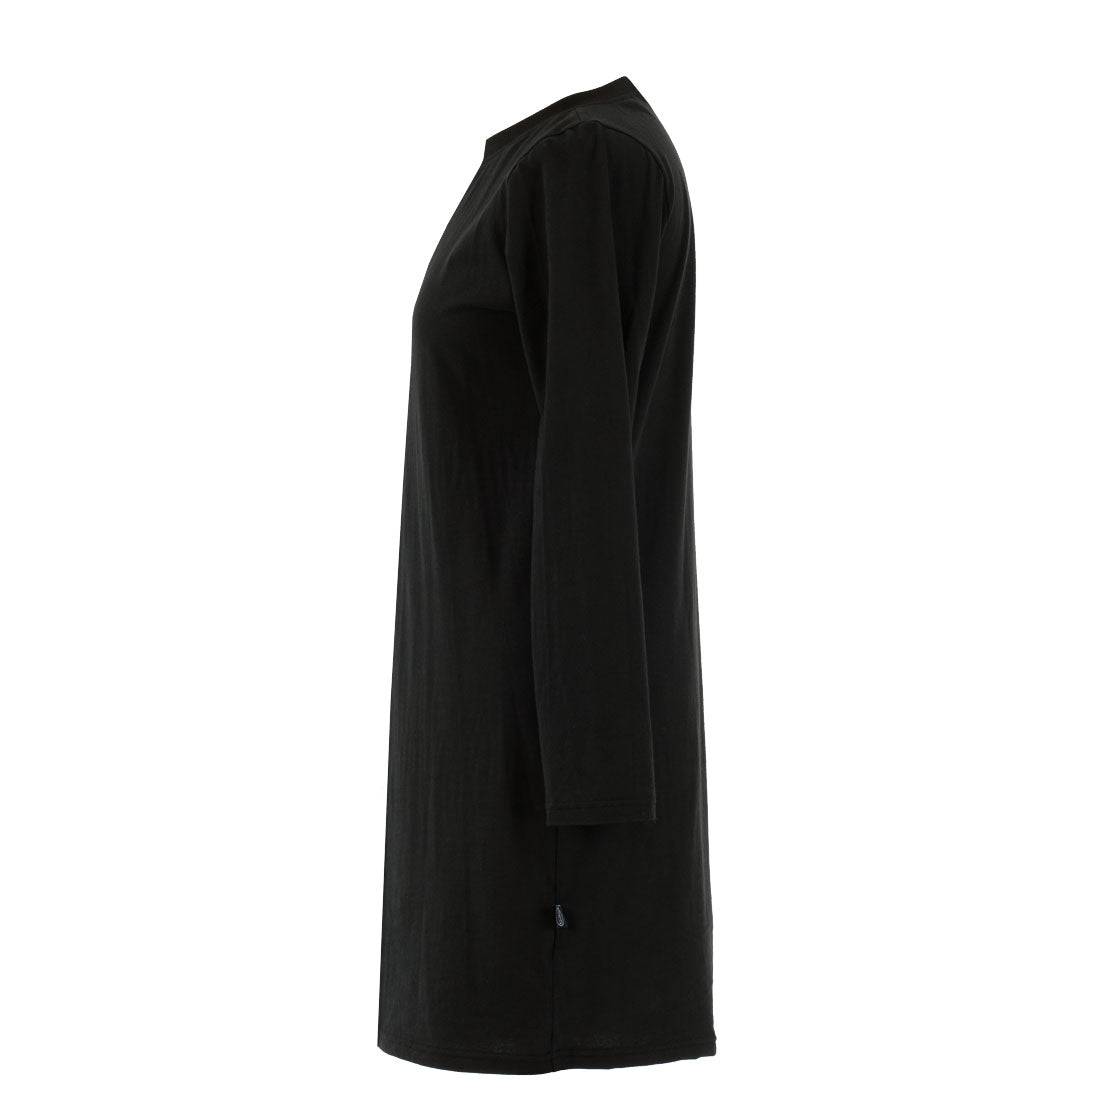 Kleid Noir aus Bio-Baumwolle - schwarz - KOLO Berlin